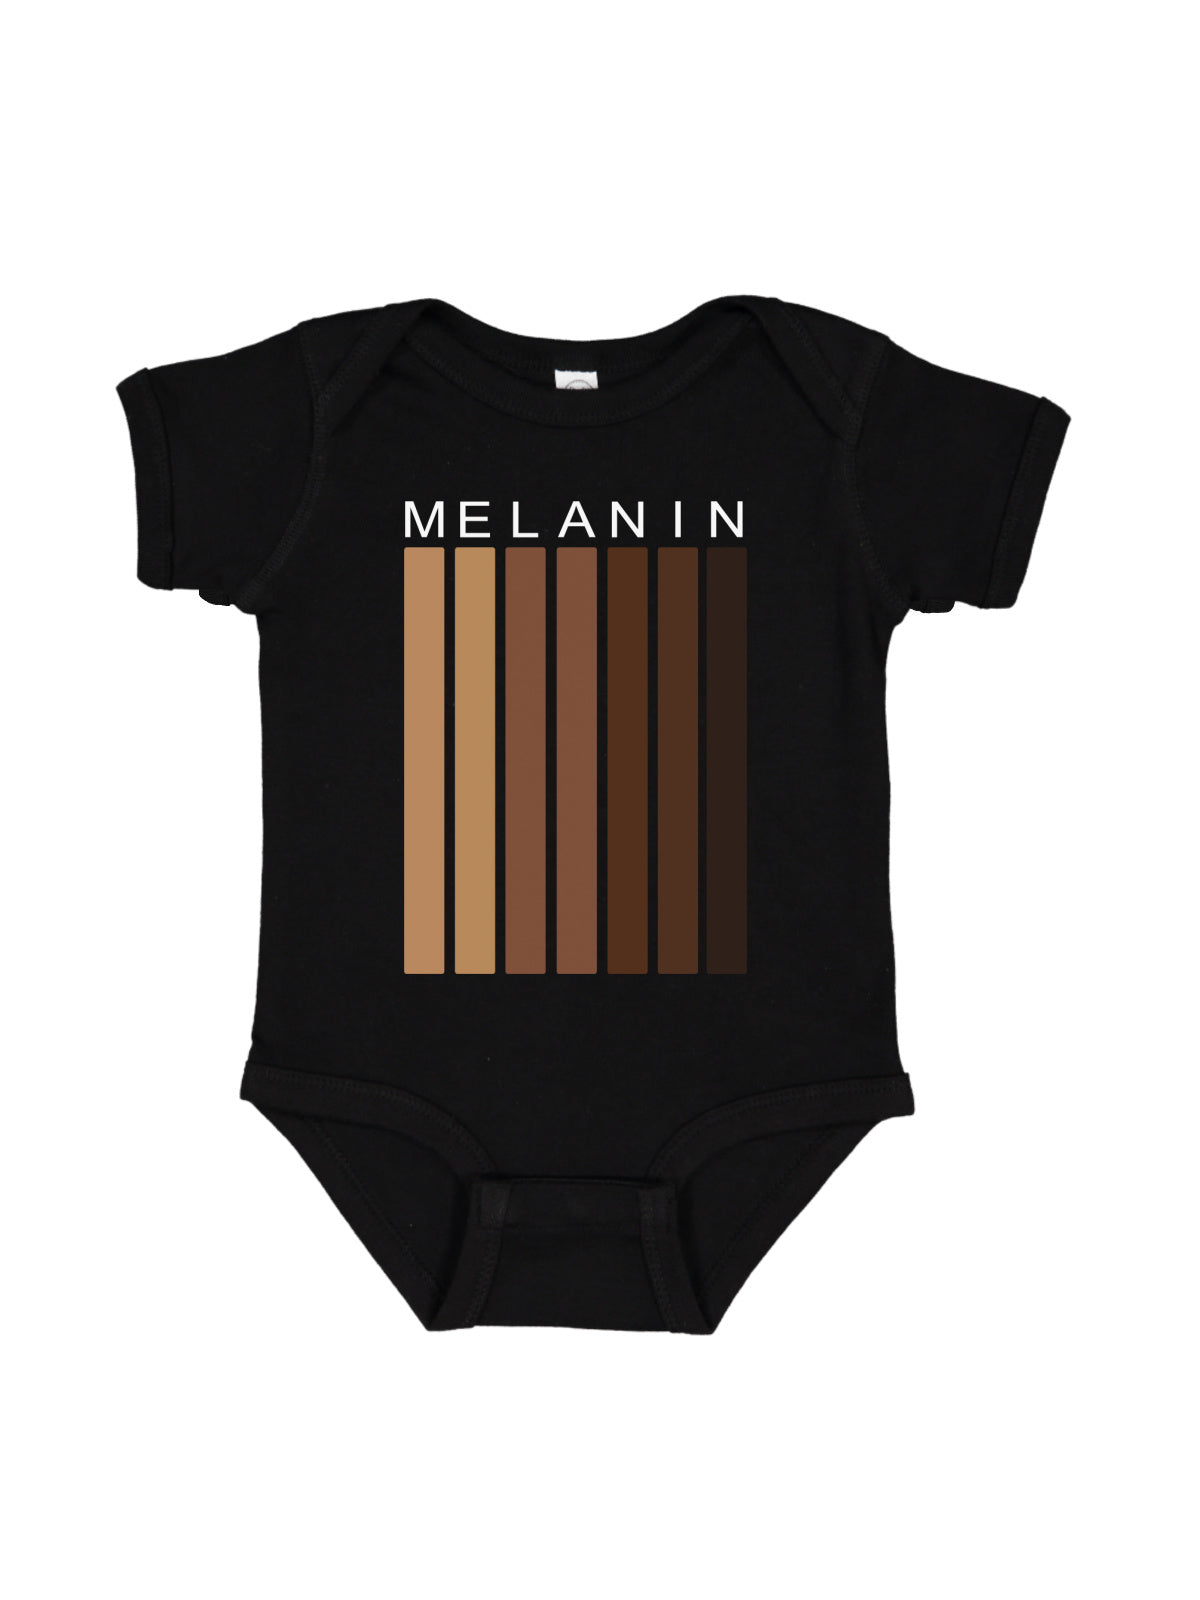 Shades of Melanin Baby Bodysuit